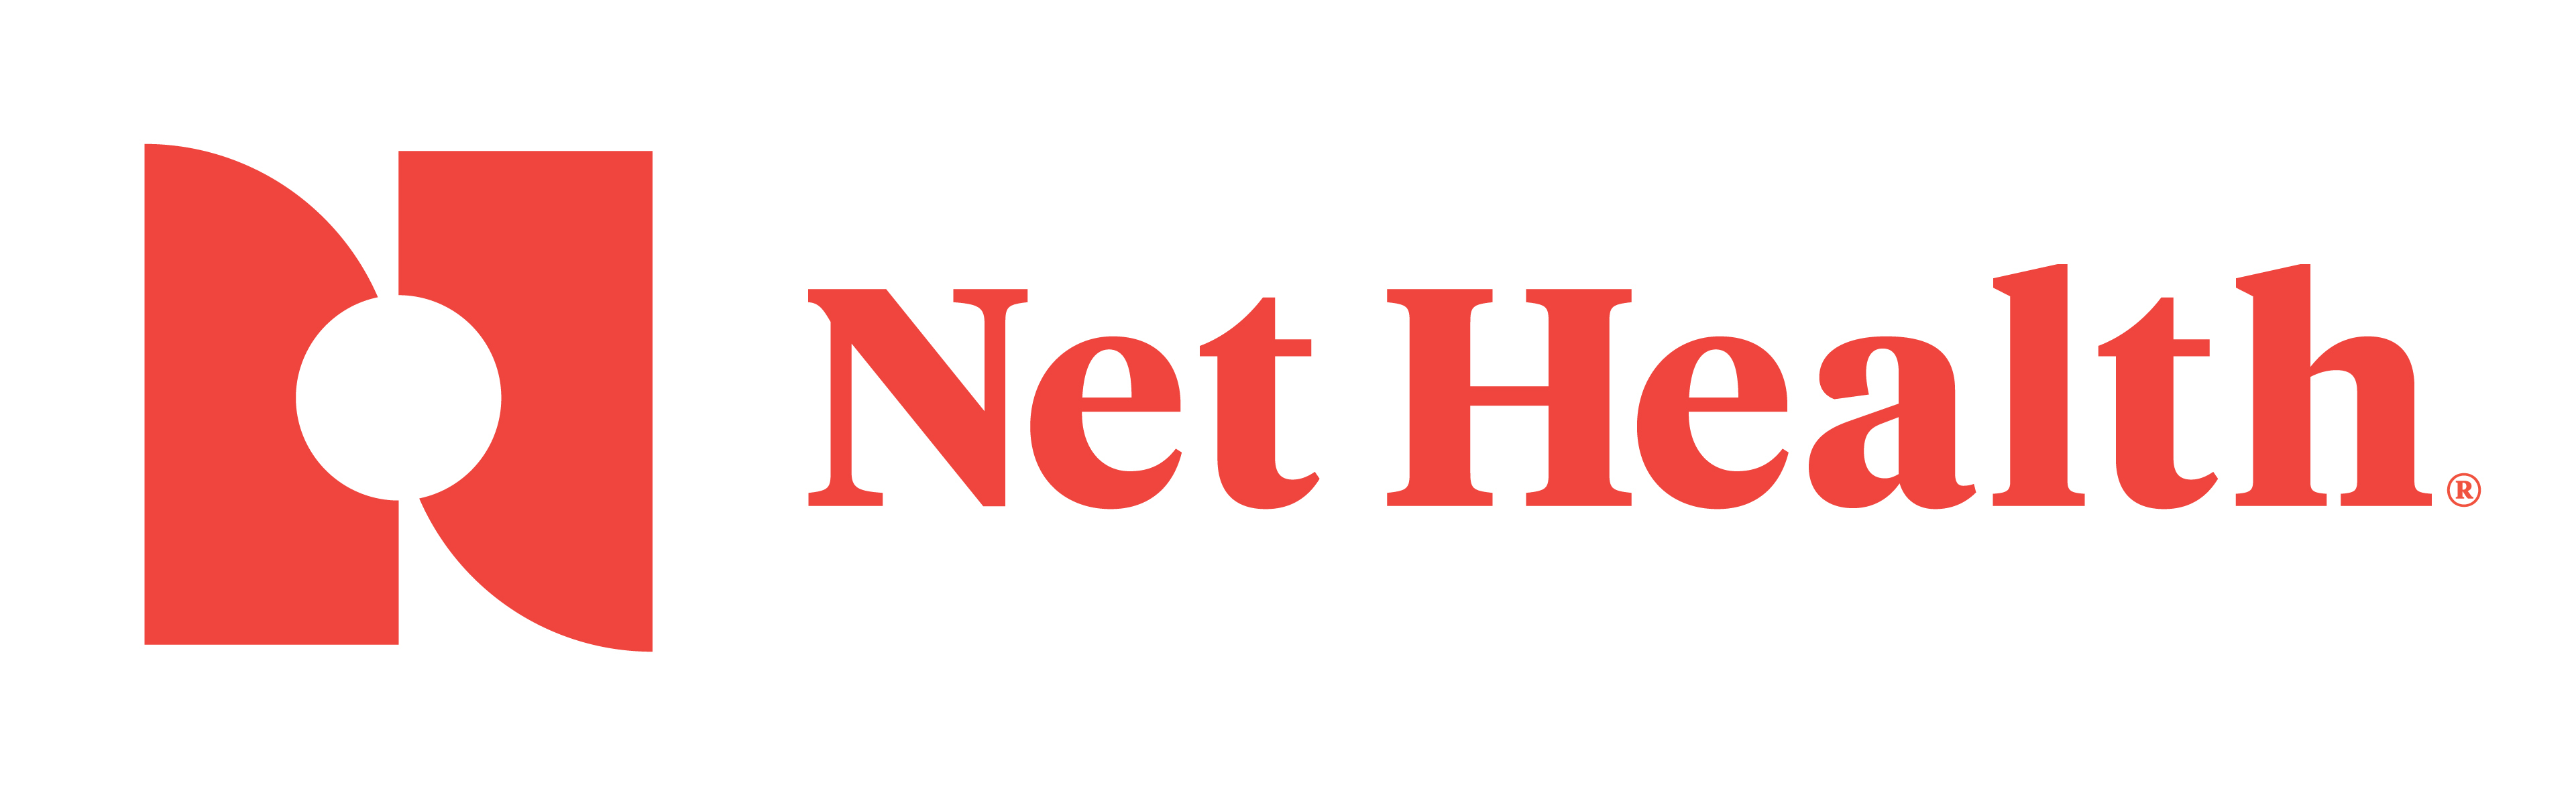 Net Health Logo